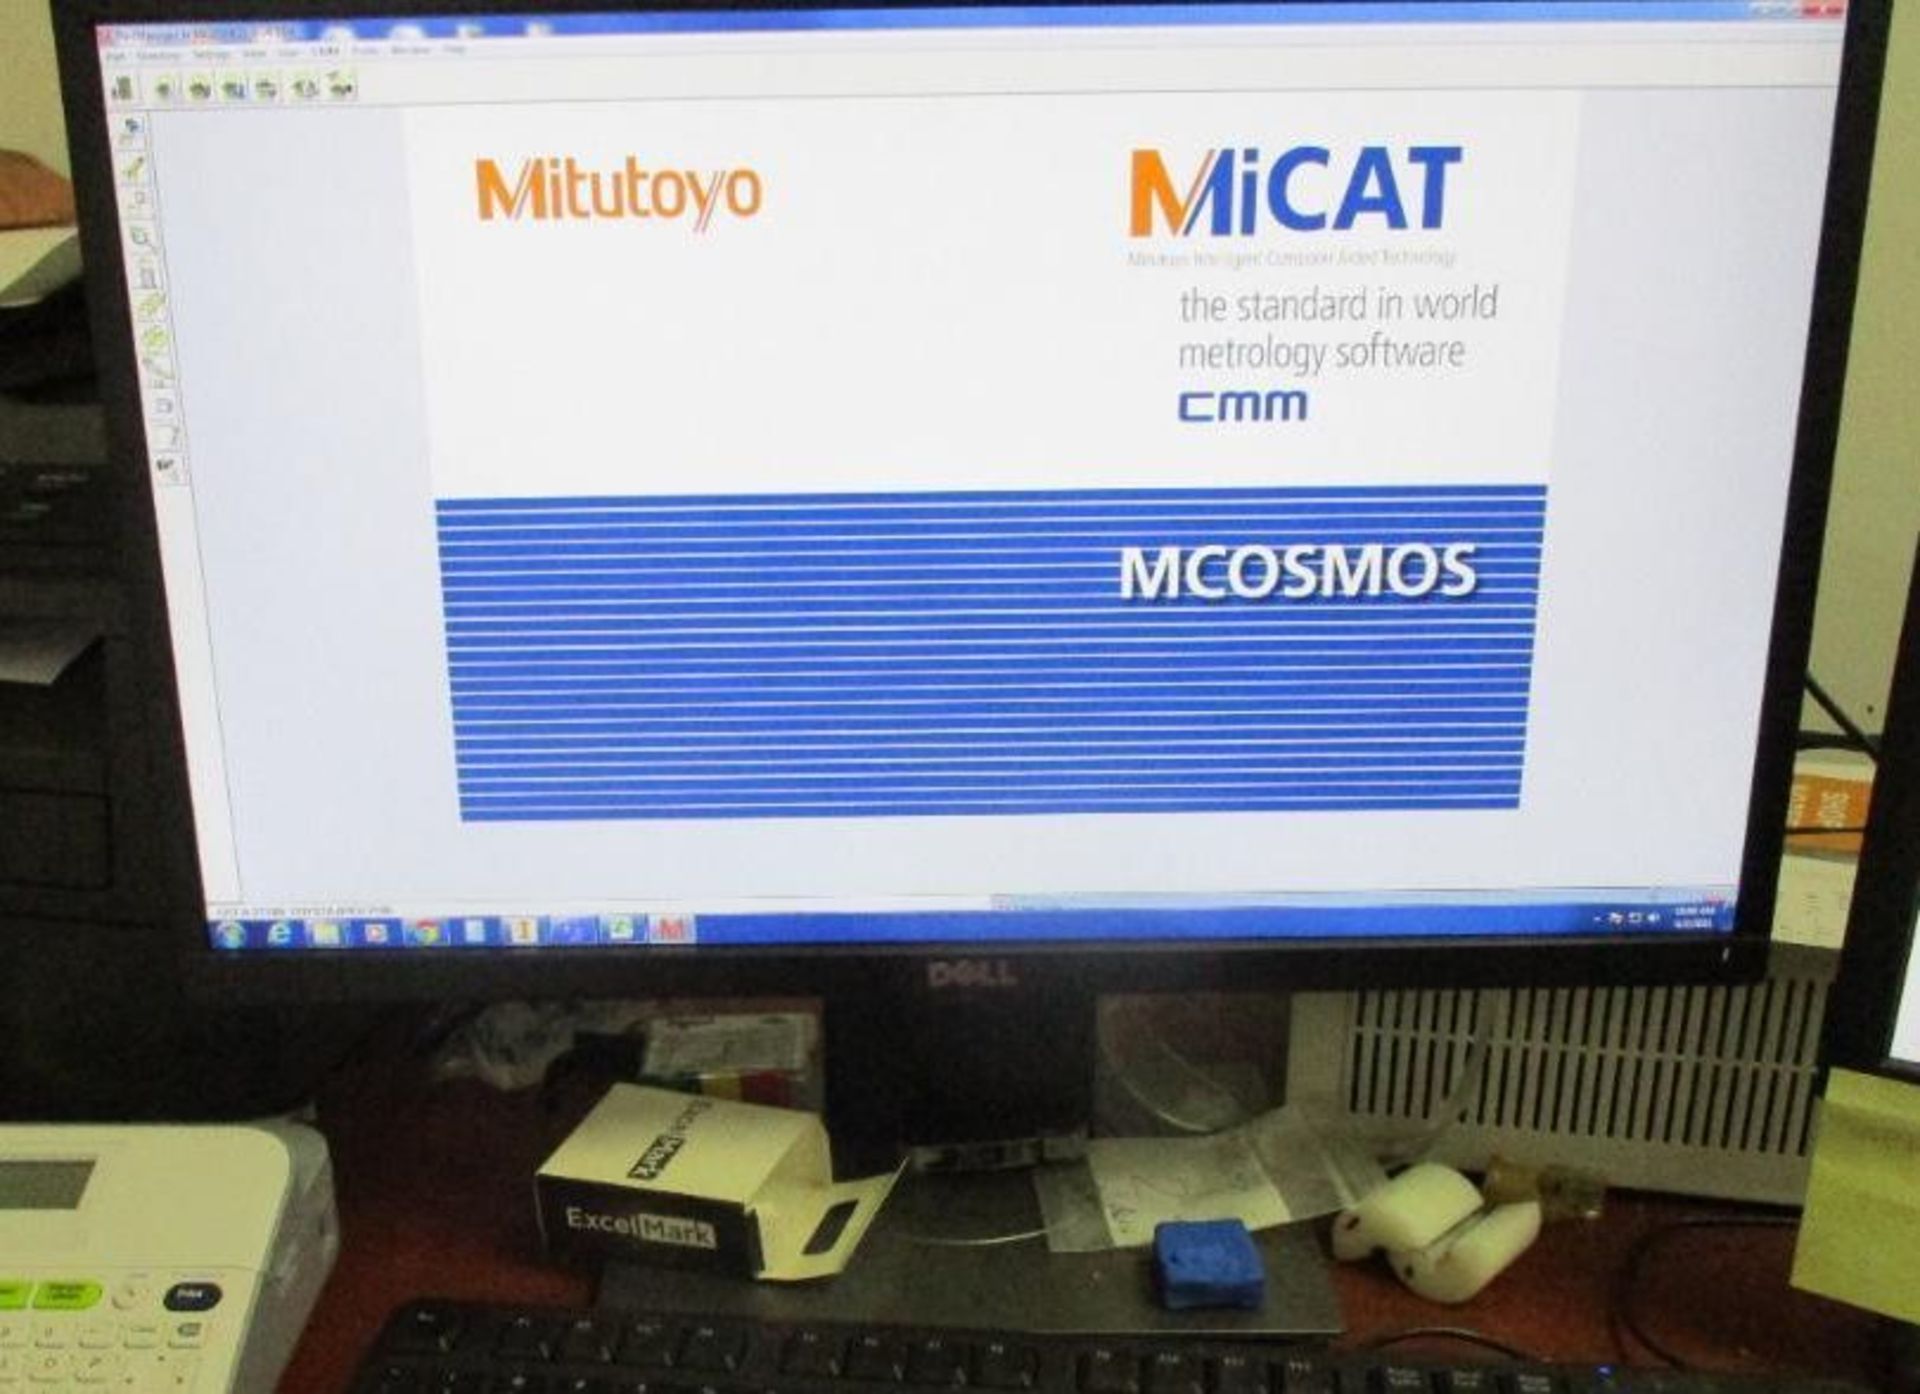 Mitutoyo Crysta Apex S 7106 DCC CMM, 27.3" x 39.4" x 23.4", MCosmos v4.1, PH-10MQ Probe, New 2015 - Image 4 of 5